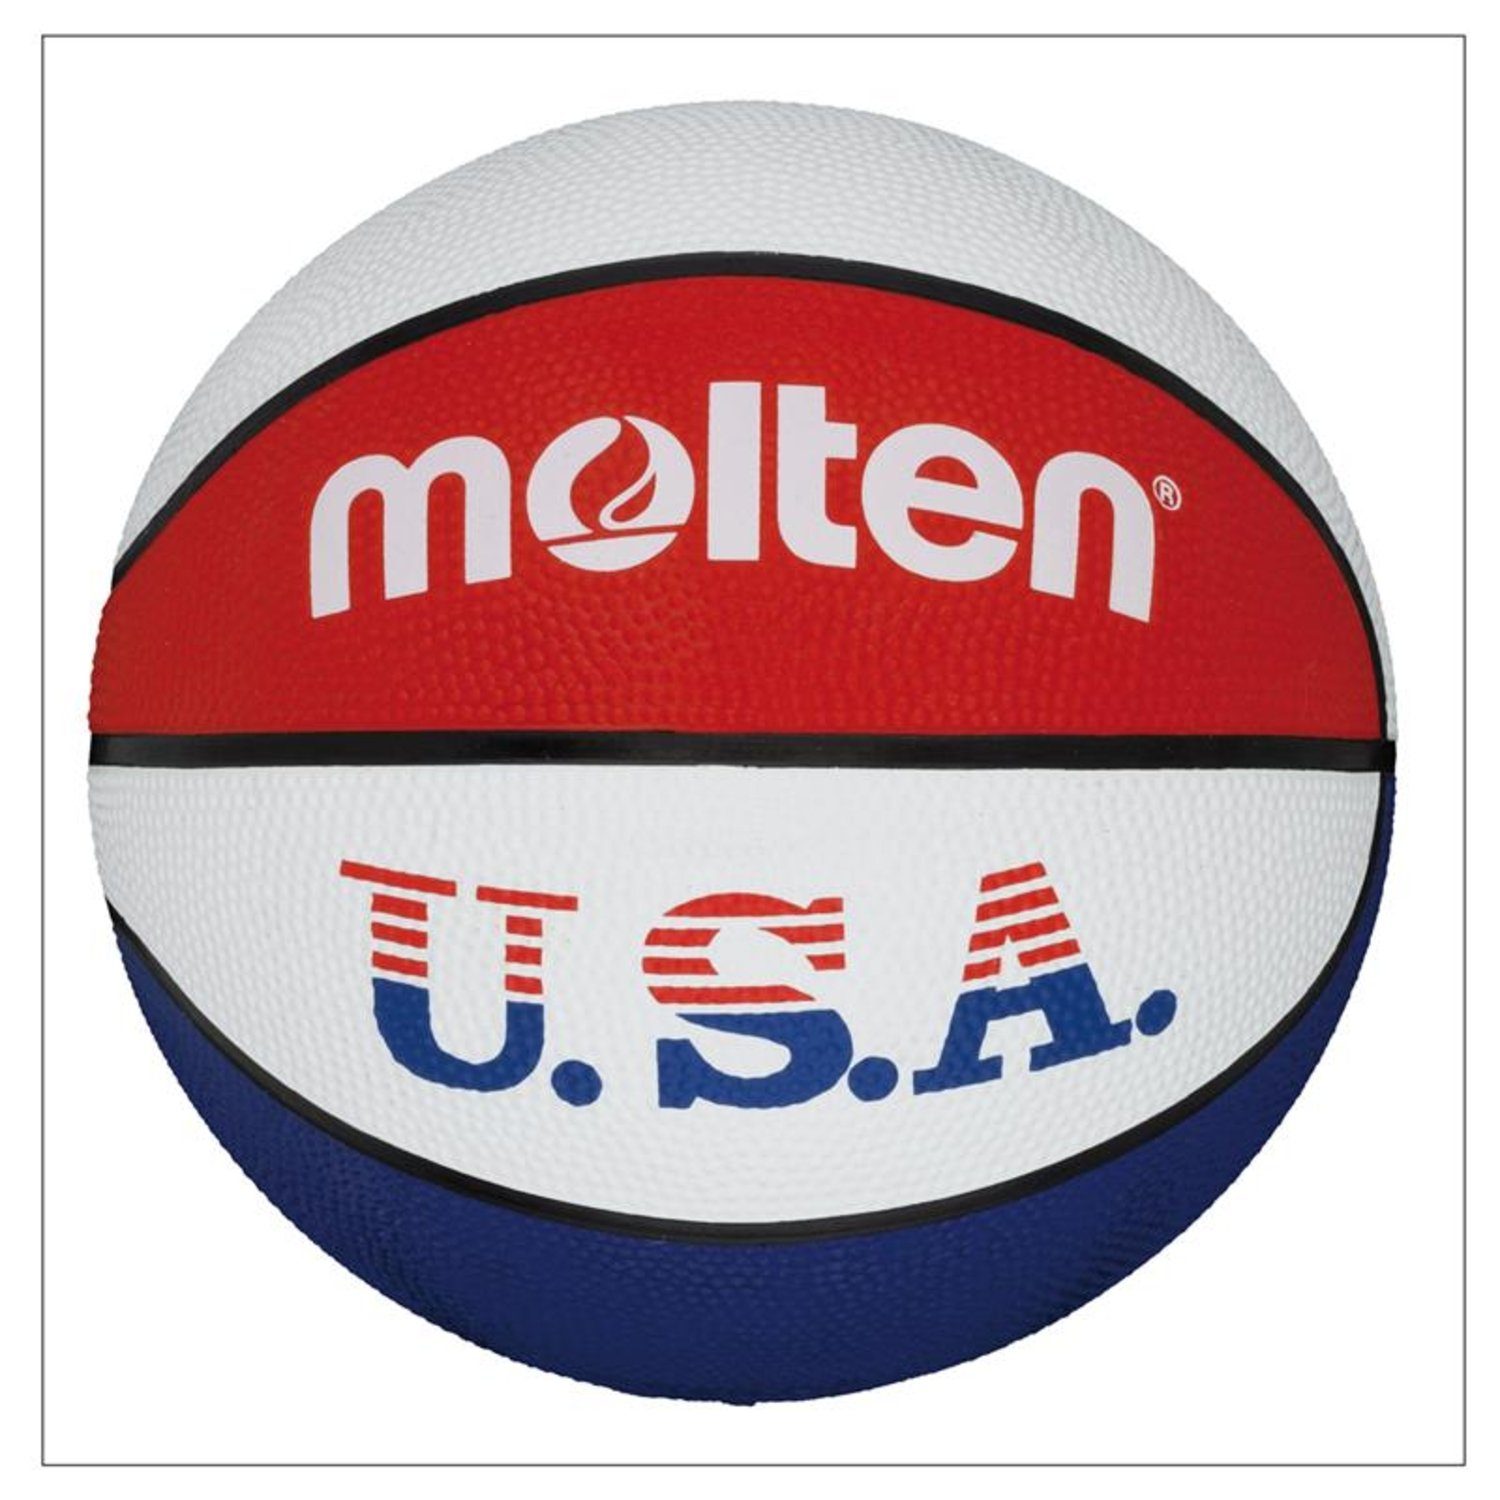 Gr. Trainingsball Basketballkorb Molten USA, BC7R-USA 7